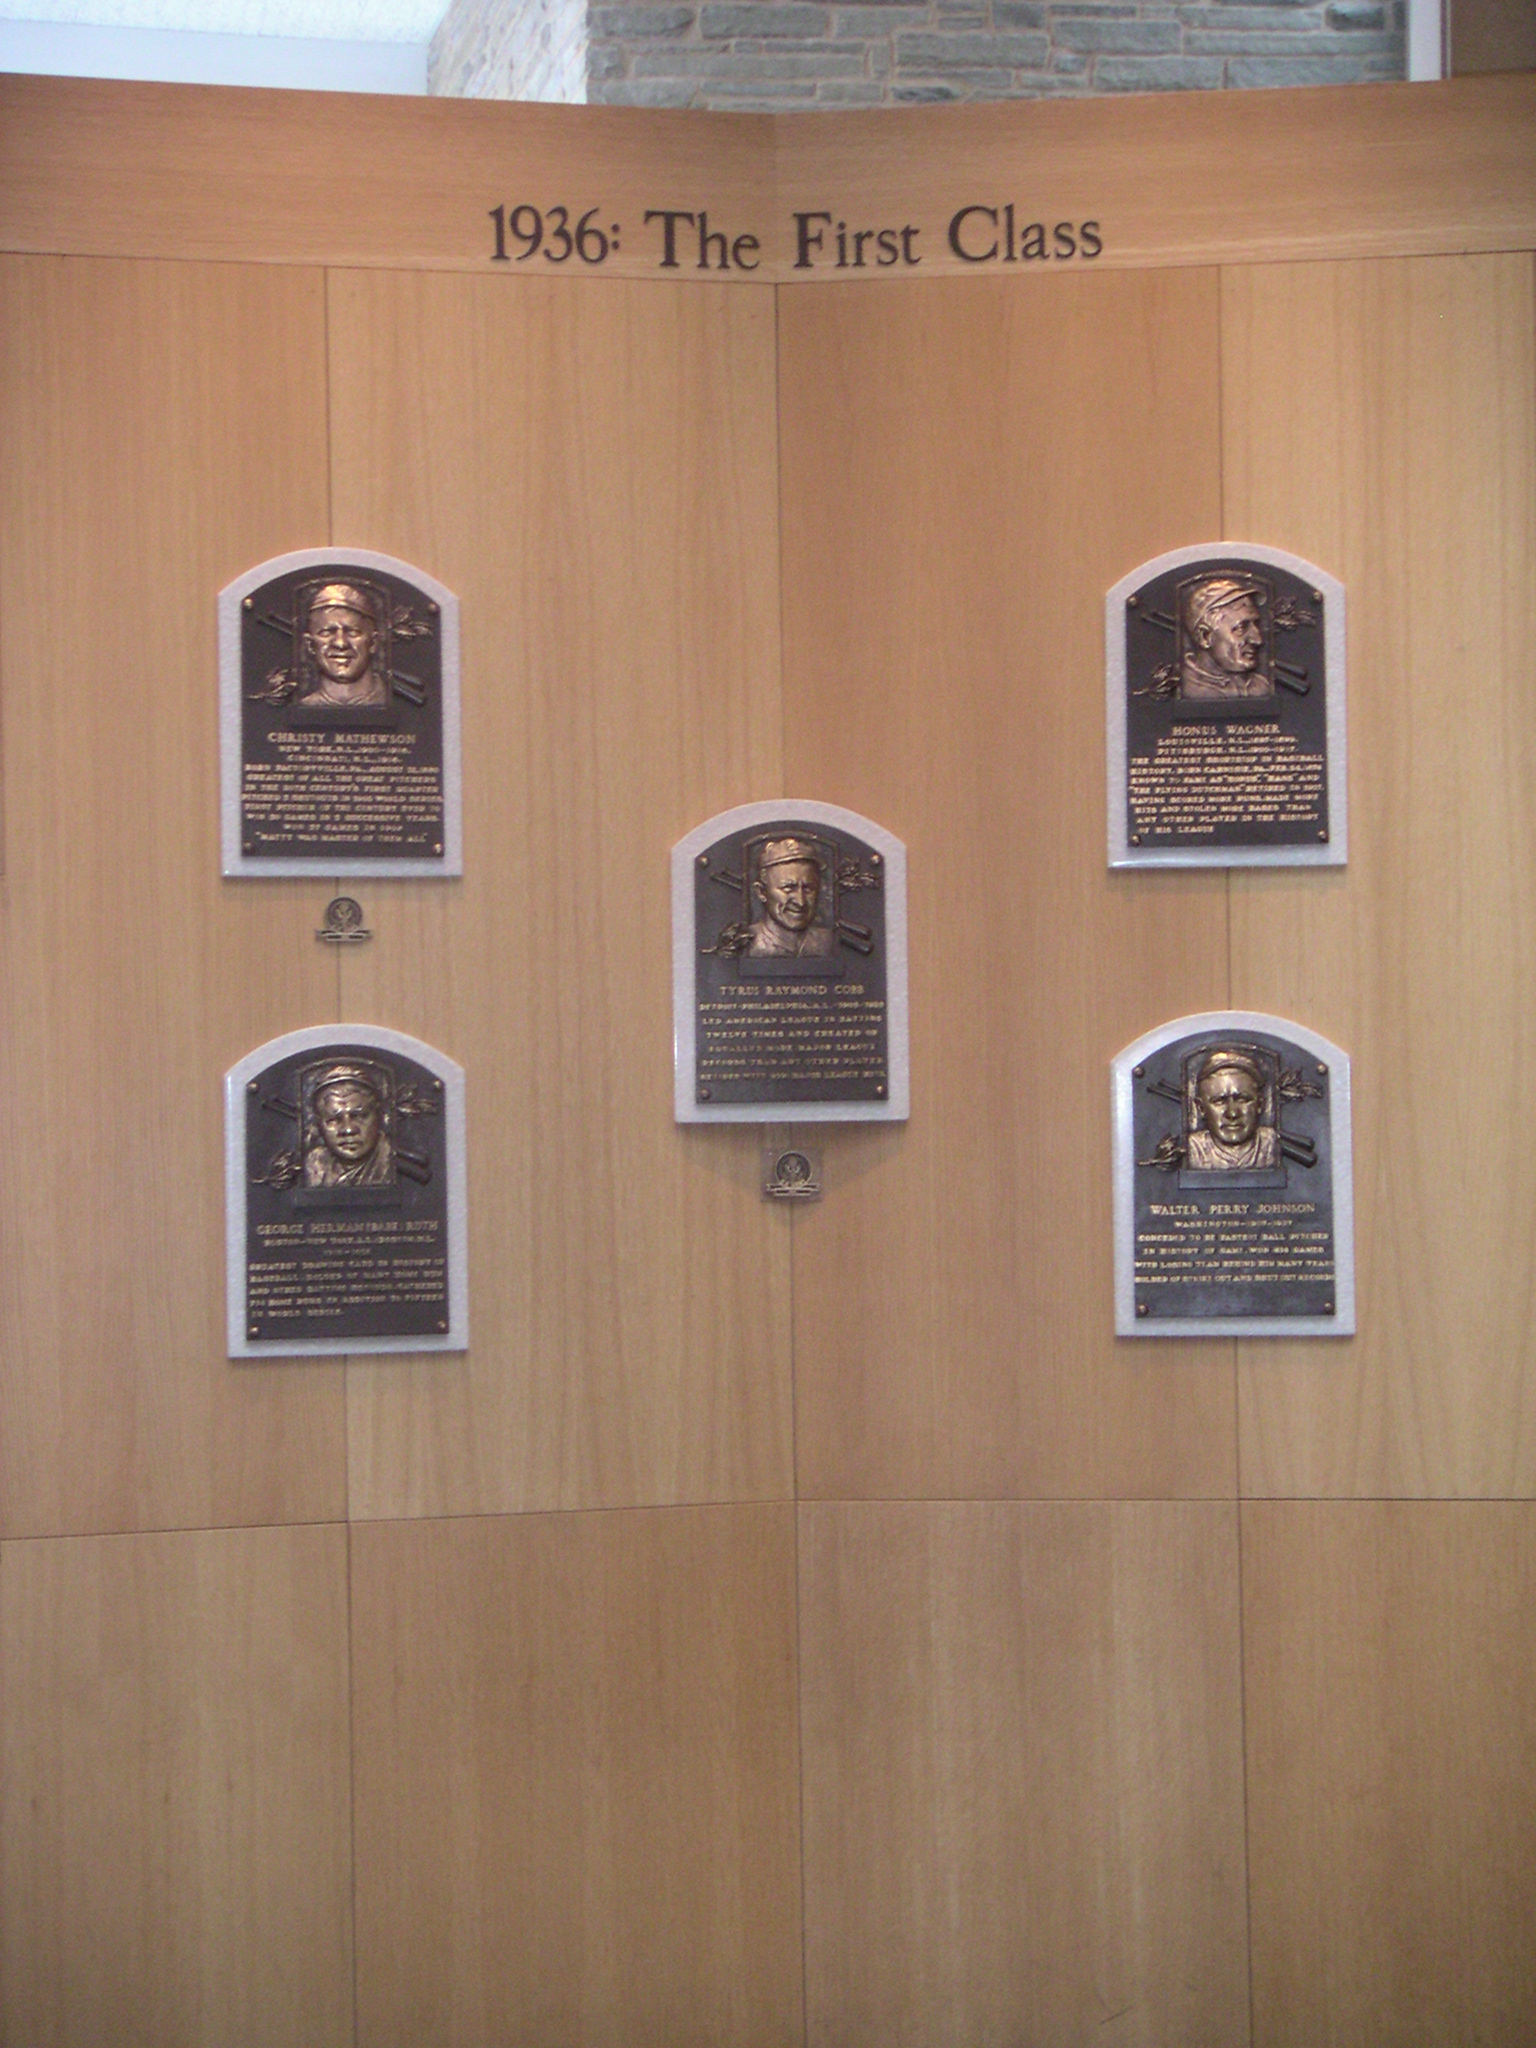 National Baseball Hall of Fame and Museum - Wikipedia